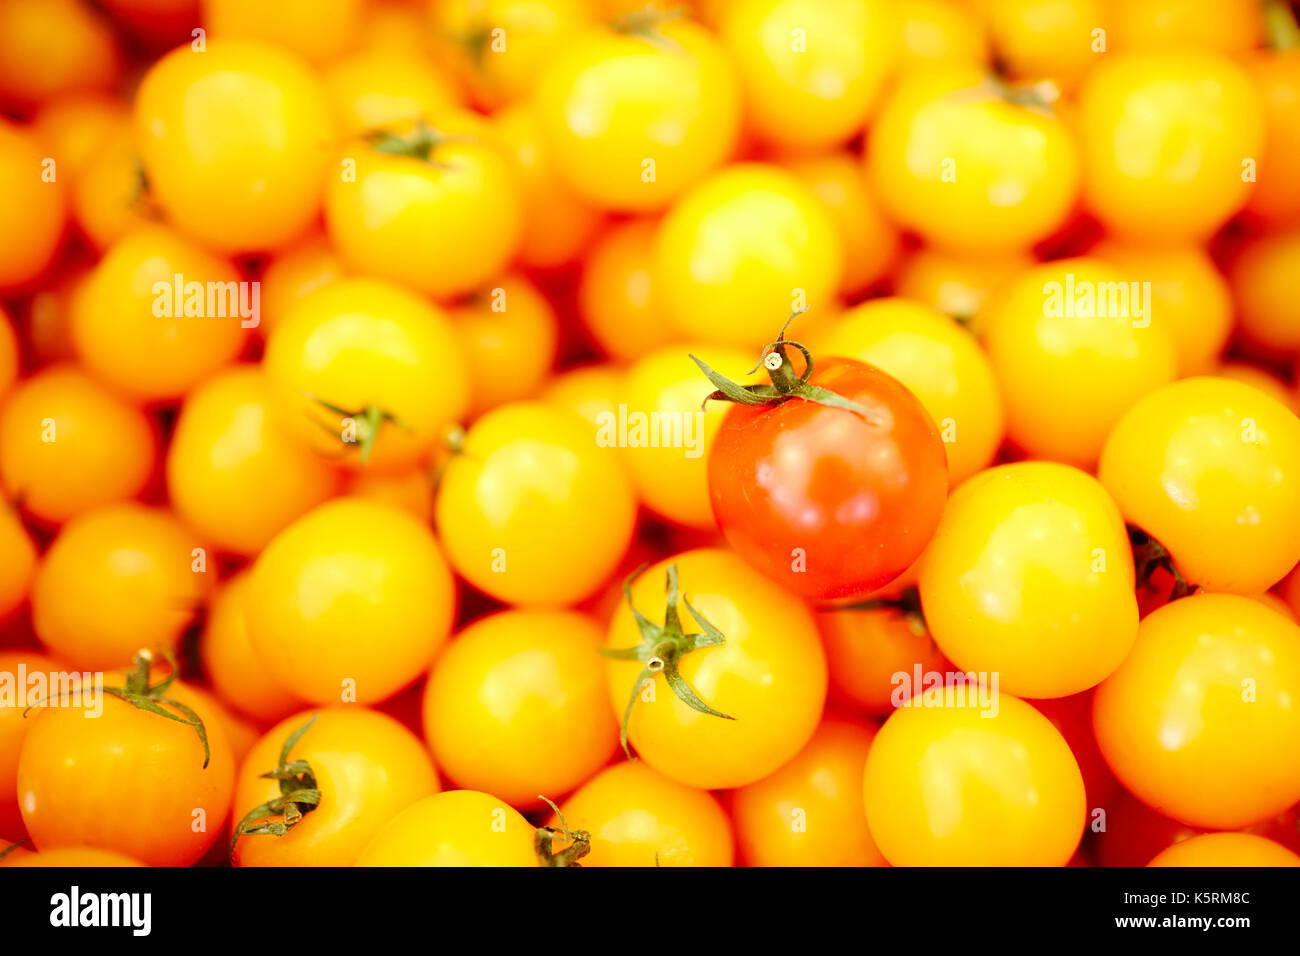 Ripe tomatoes Stock Photo